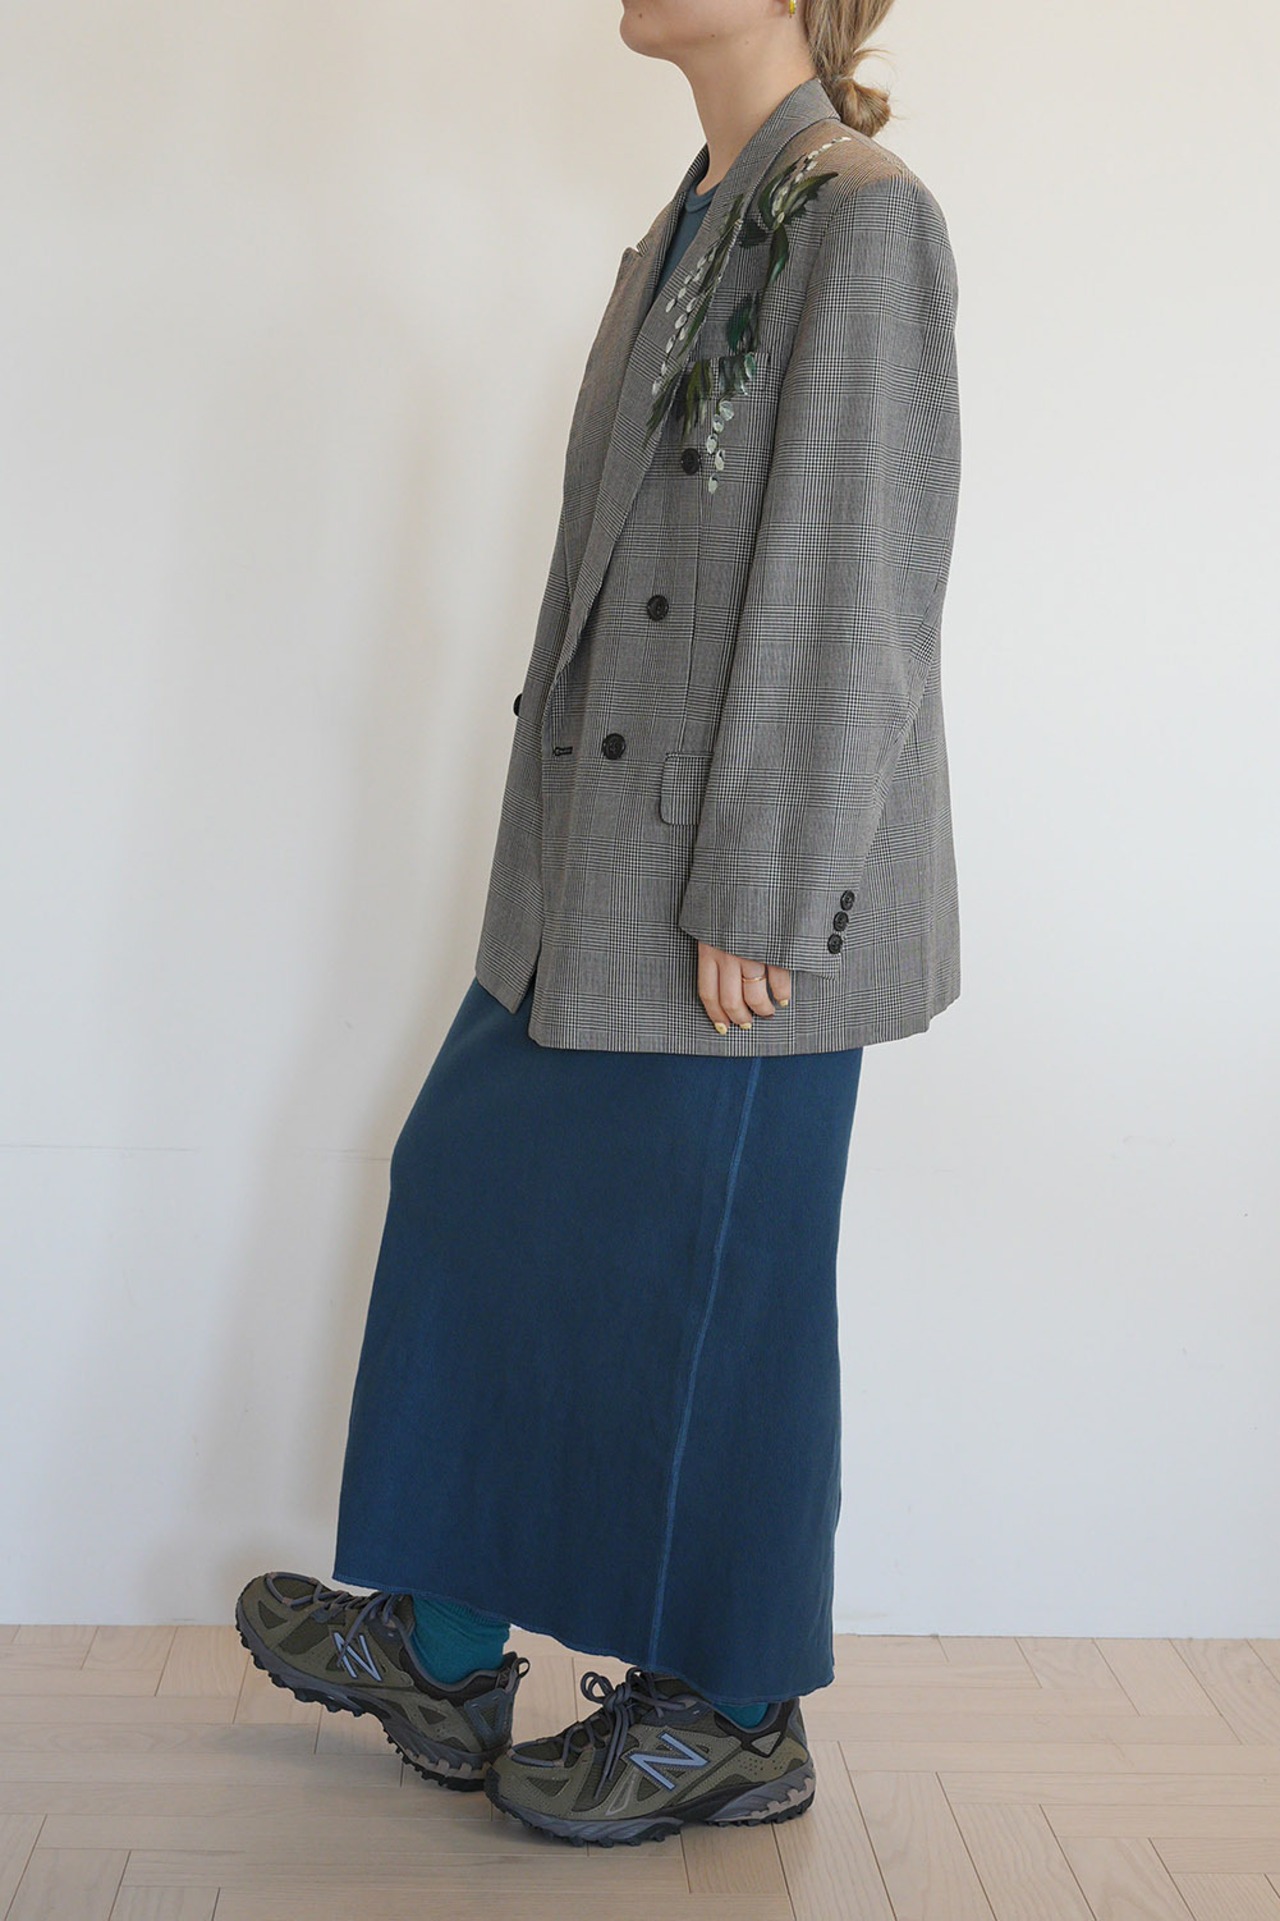 vintage tailored jacket-chidori